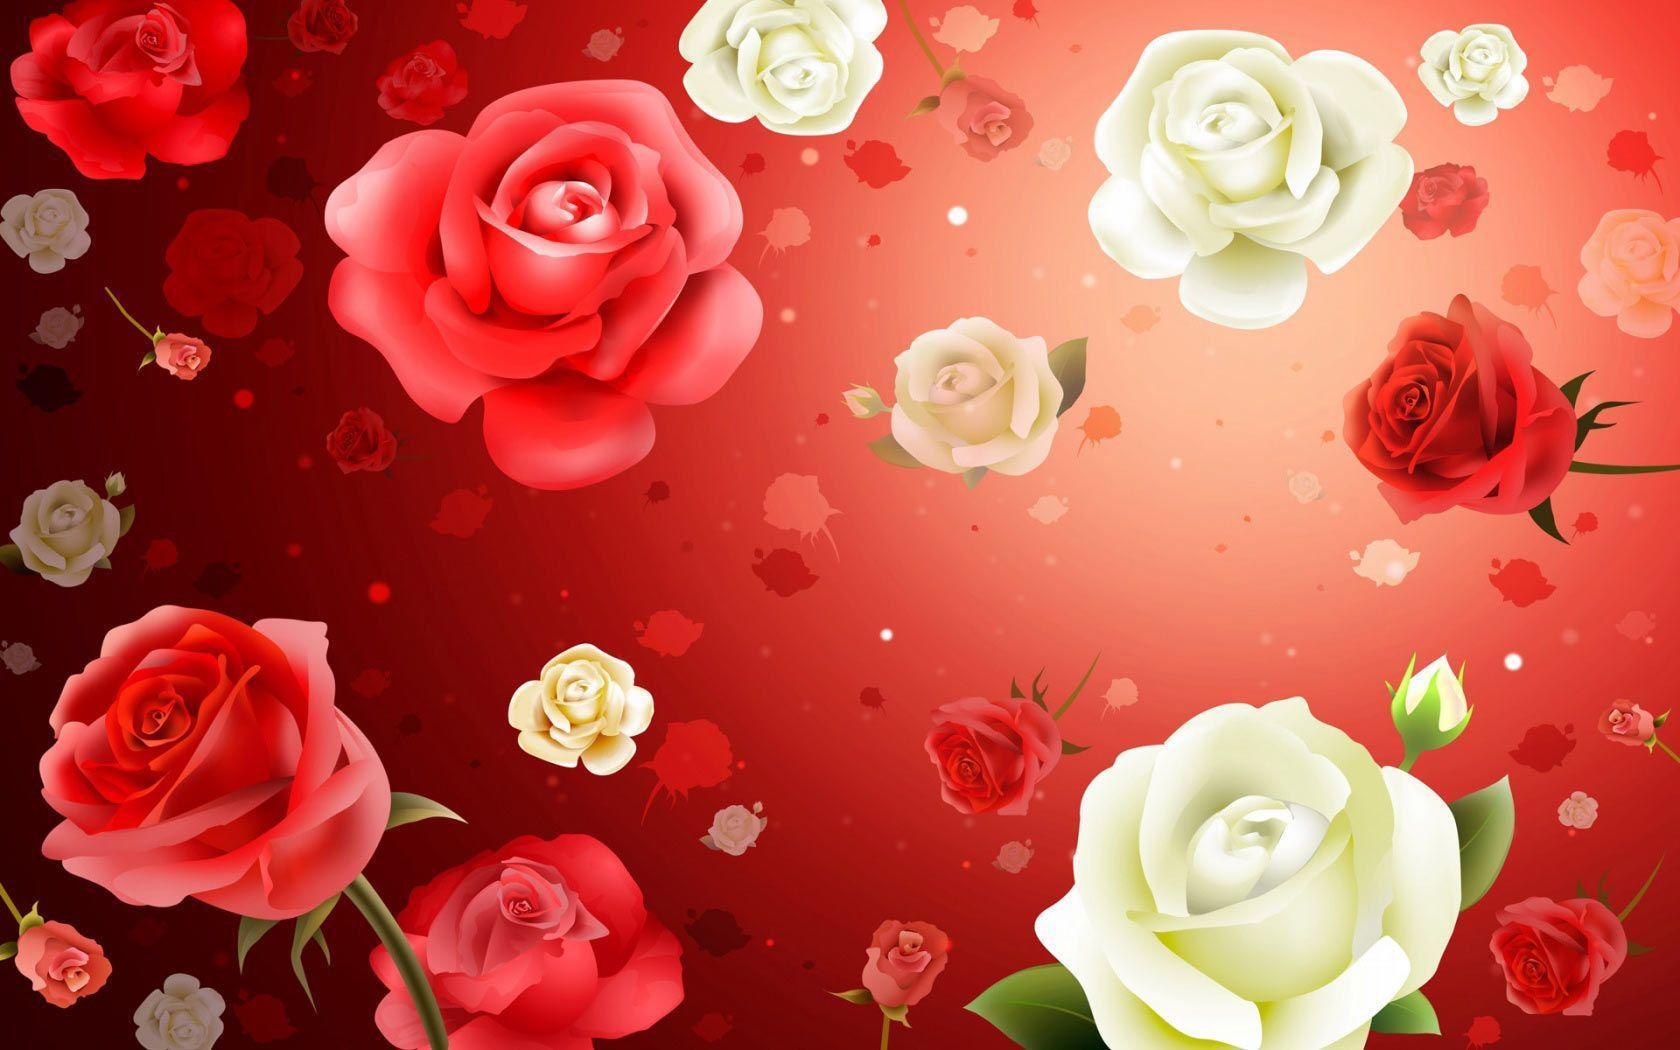 Roses flowers background Windows 7 Desktop Wallpaper. High